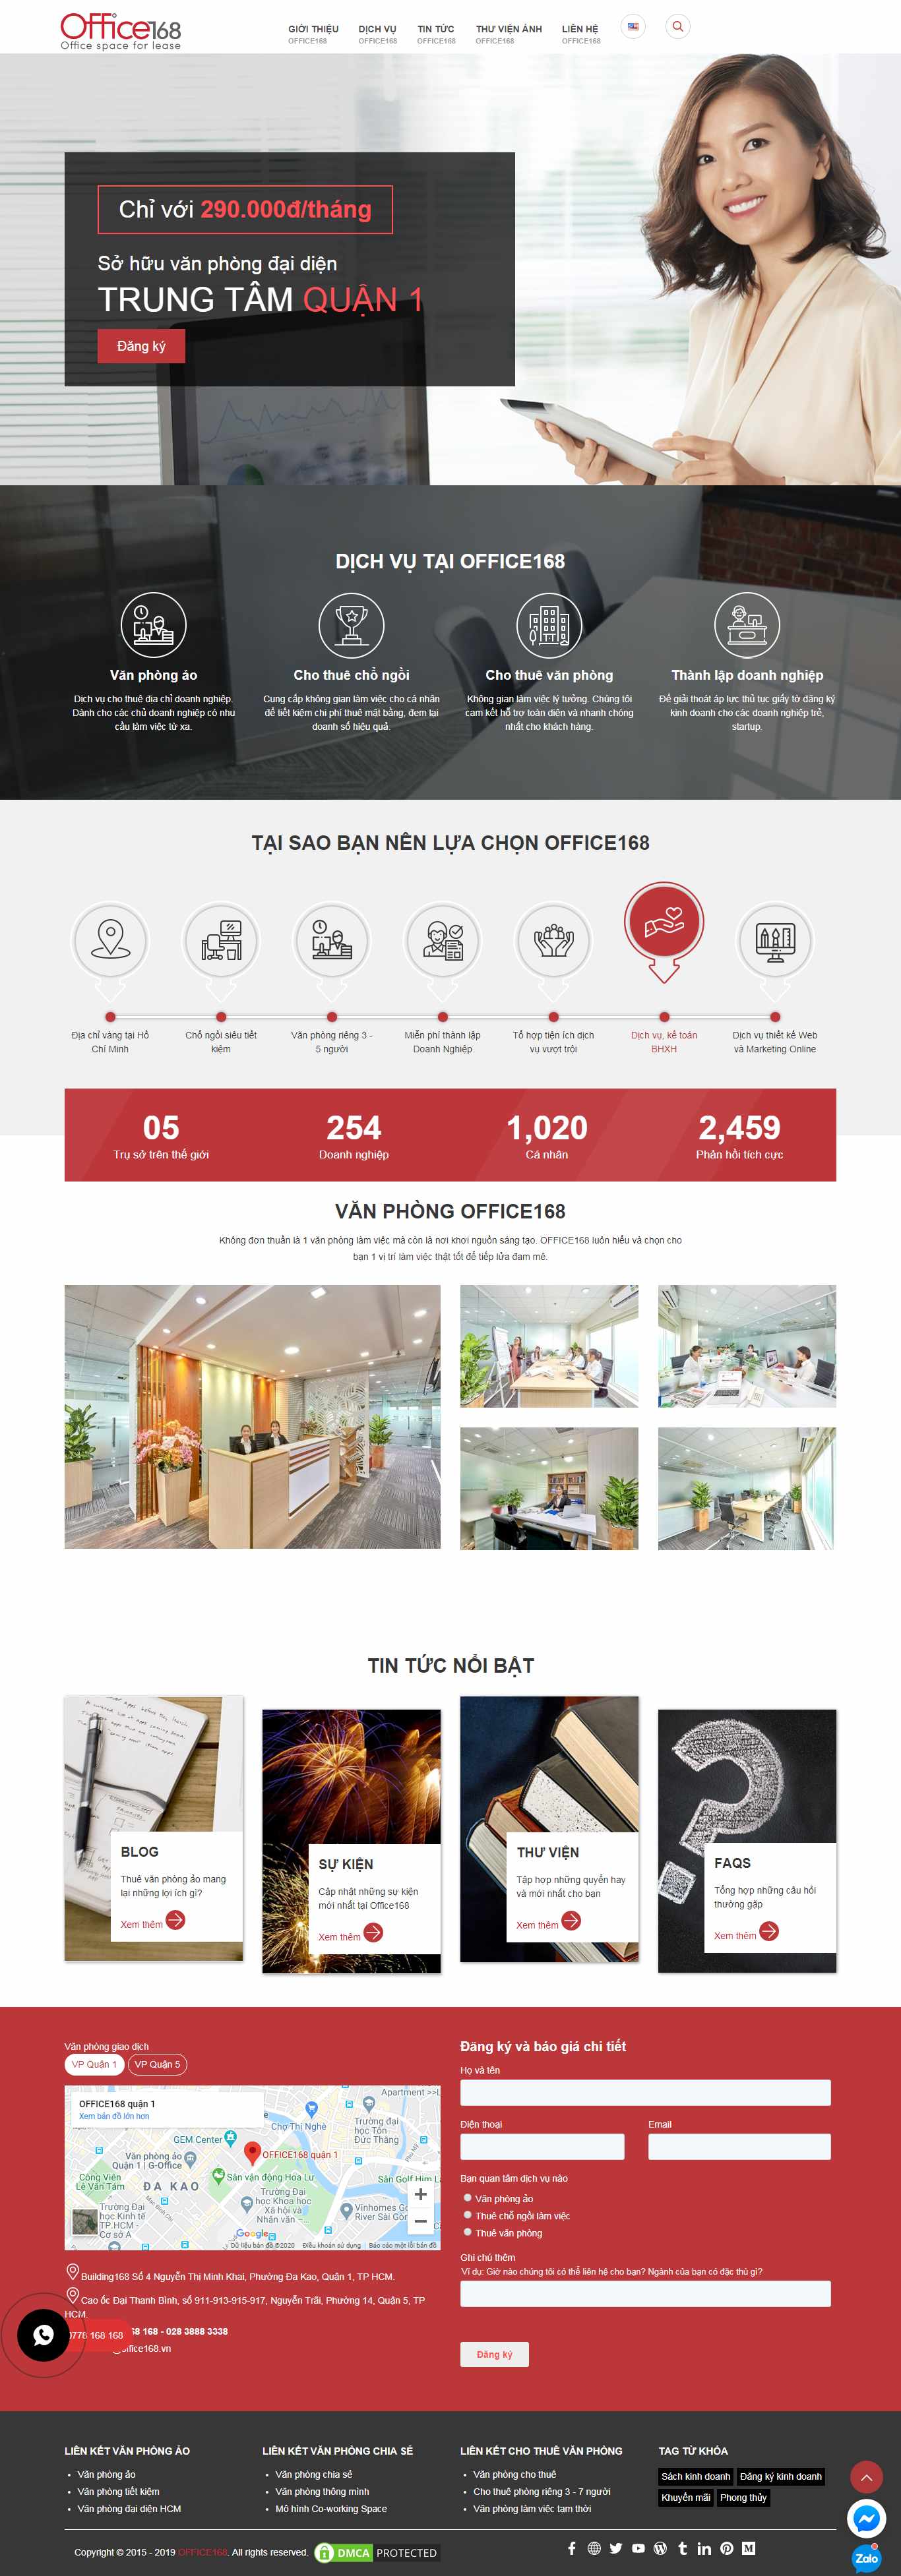 Thiết kế Website văn phòng ảo - office168.vn